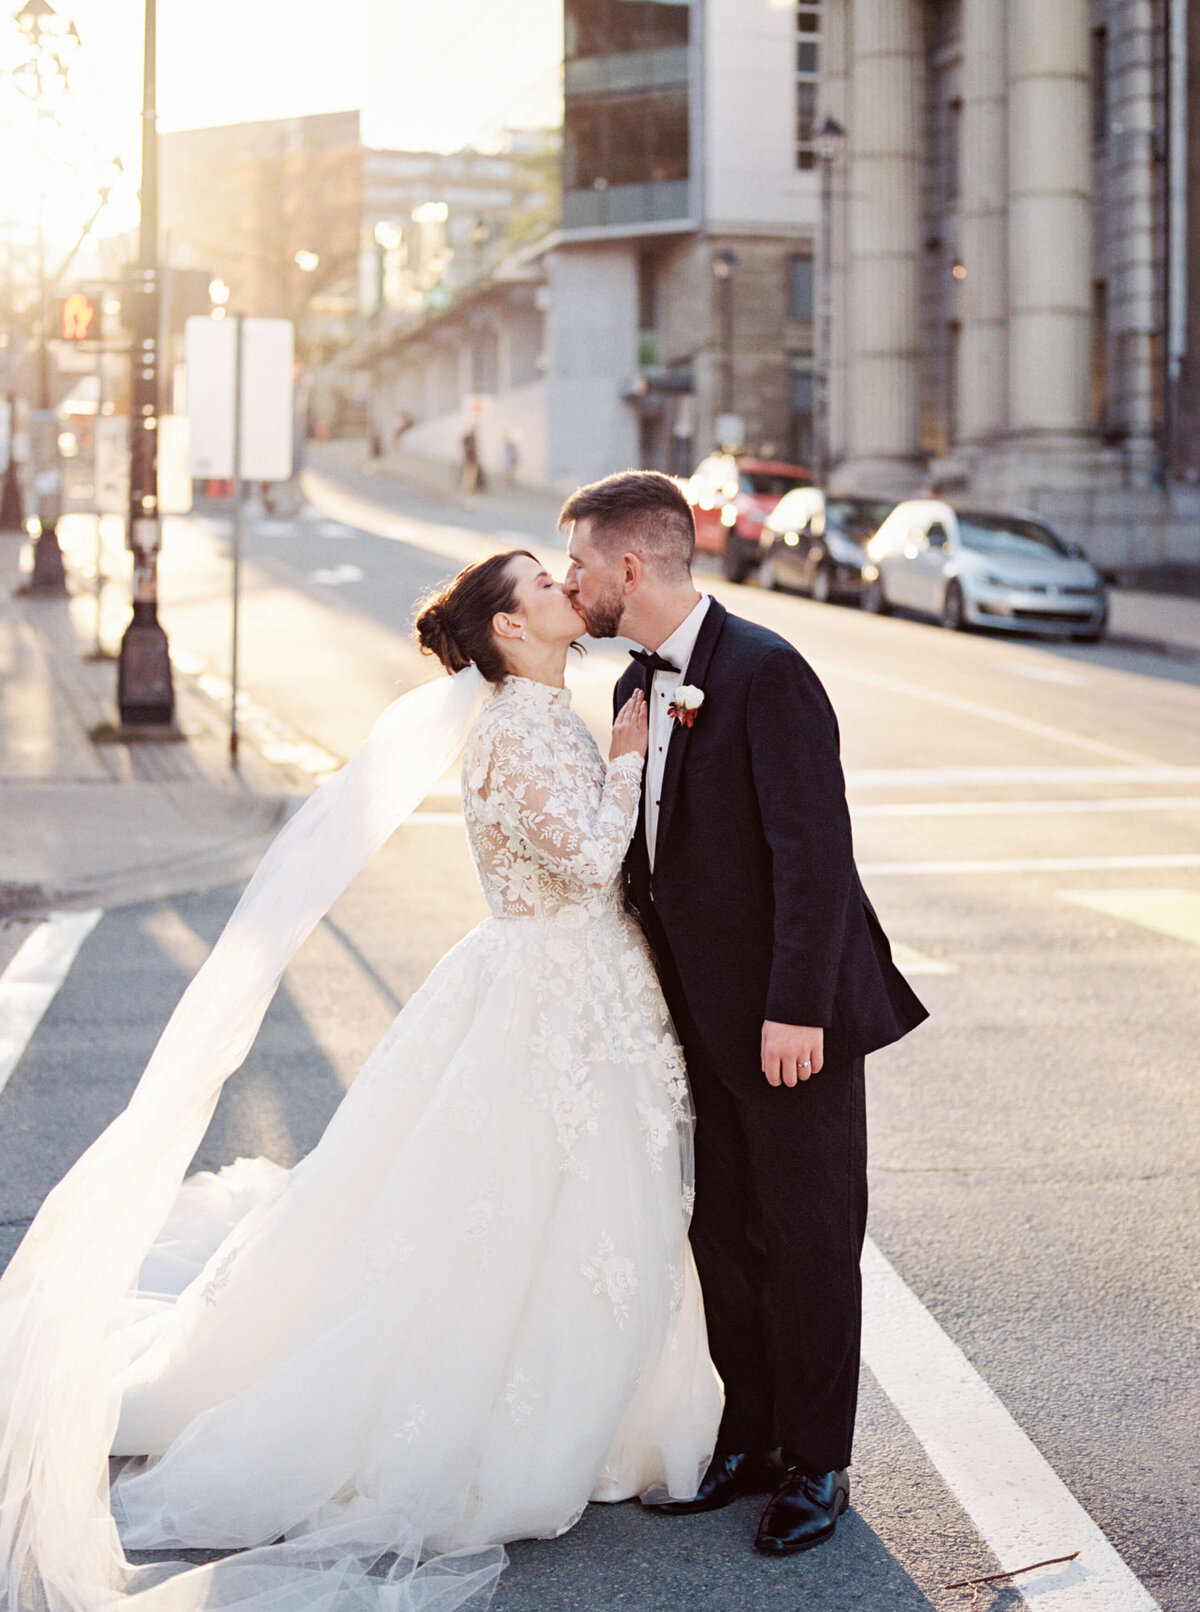 Bride and groom kissing in street in Halifax, Nova Scotia